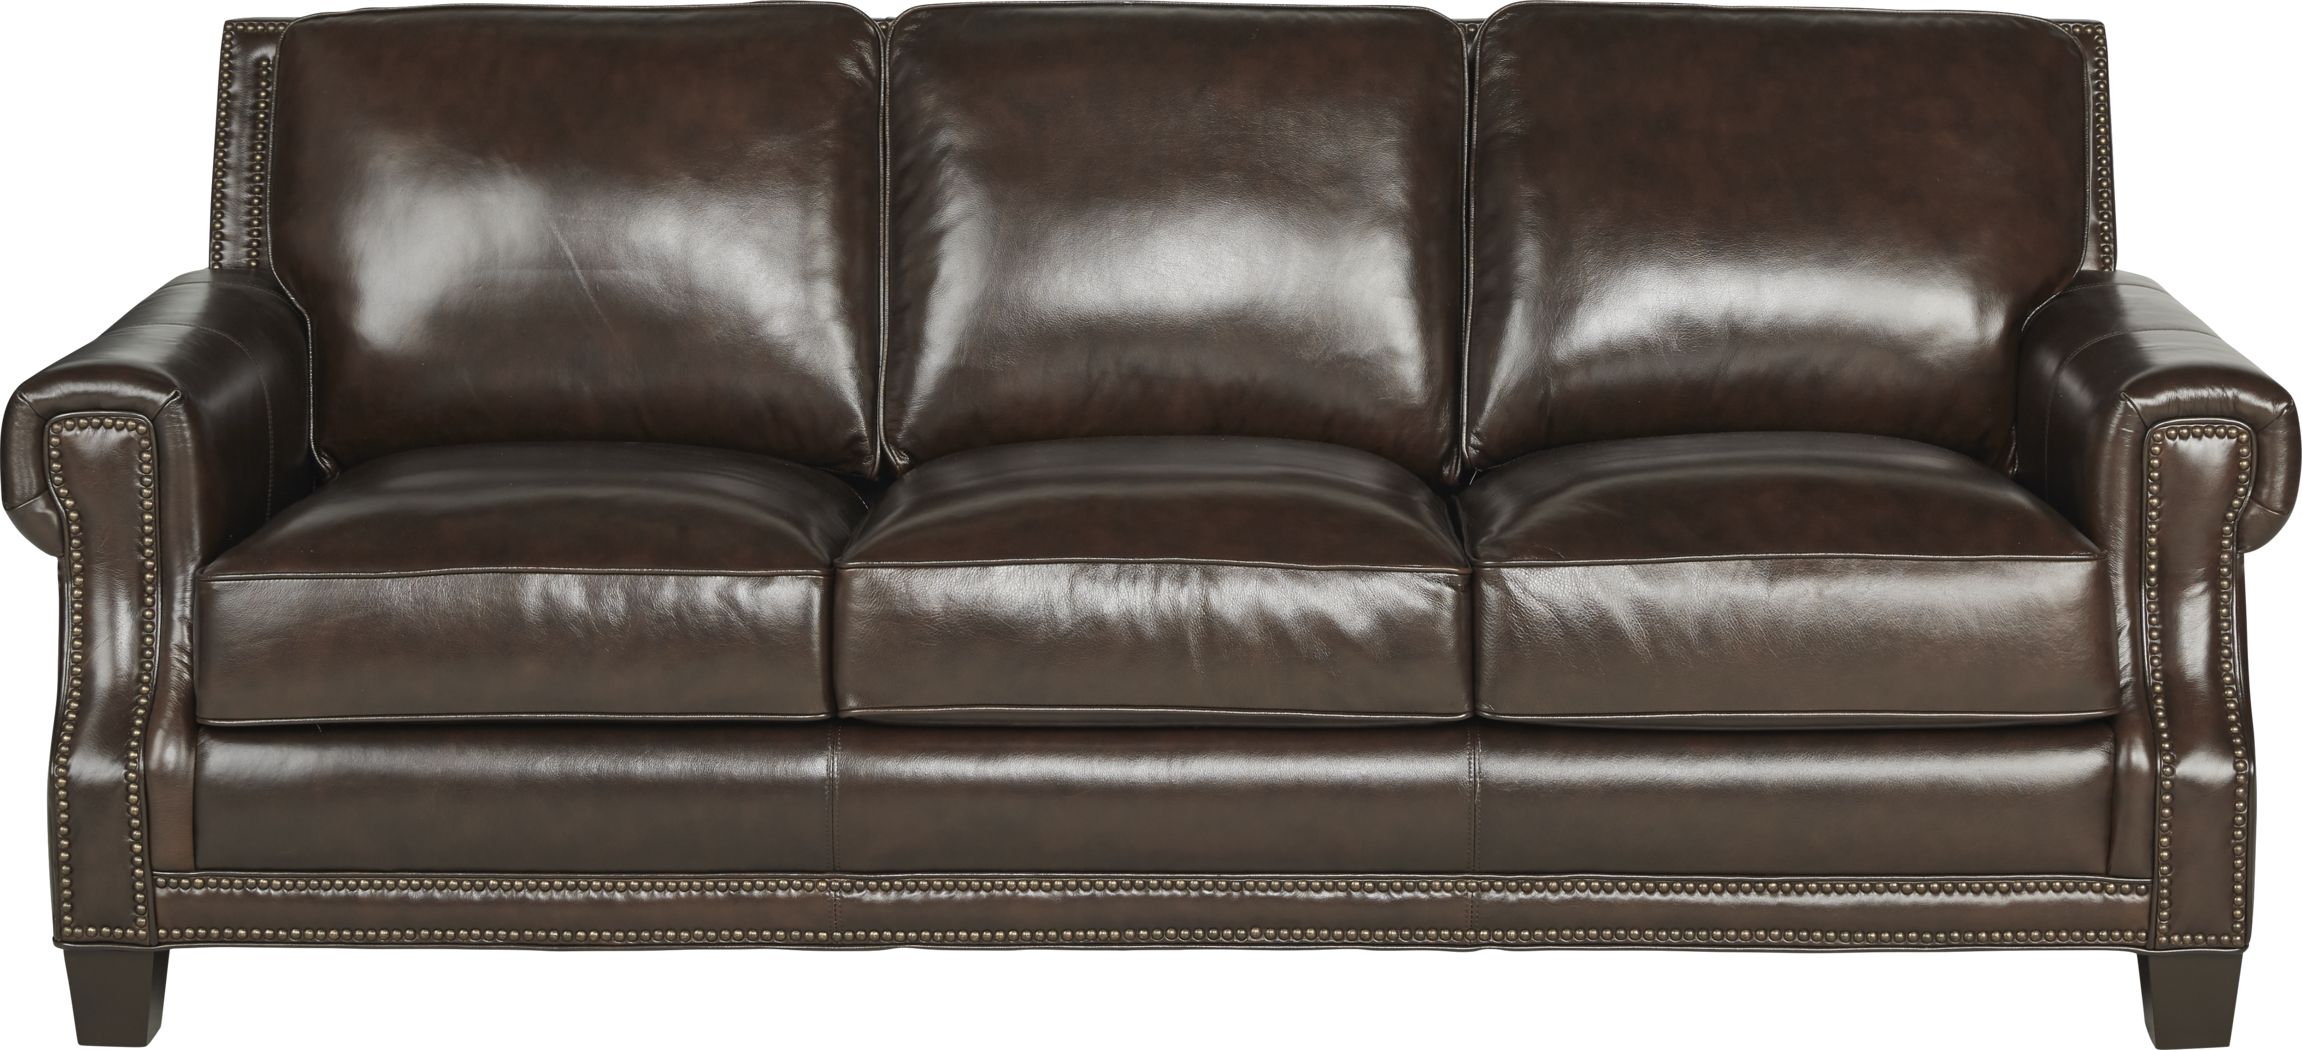 star vicenza leather sofa